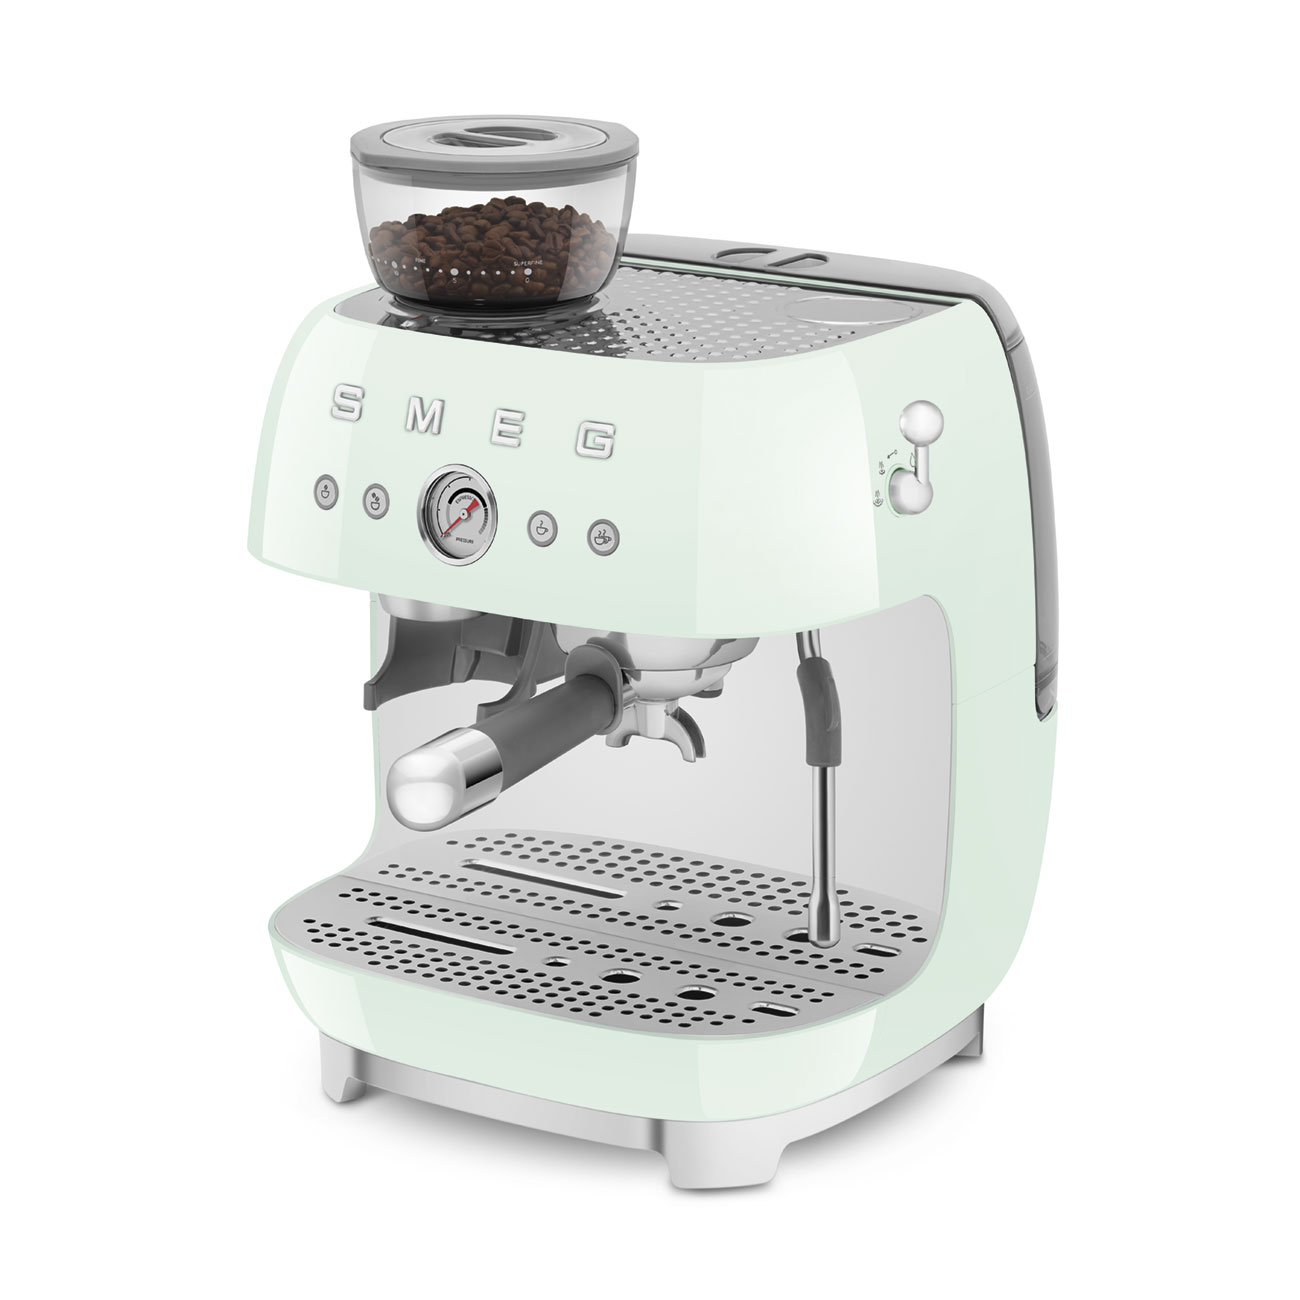 Smeg Pastel Green Espresso Manual Coffee Machine with Grinder_9